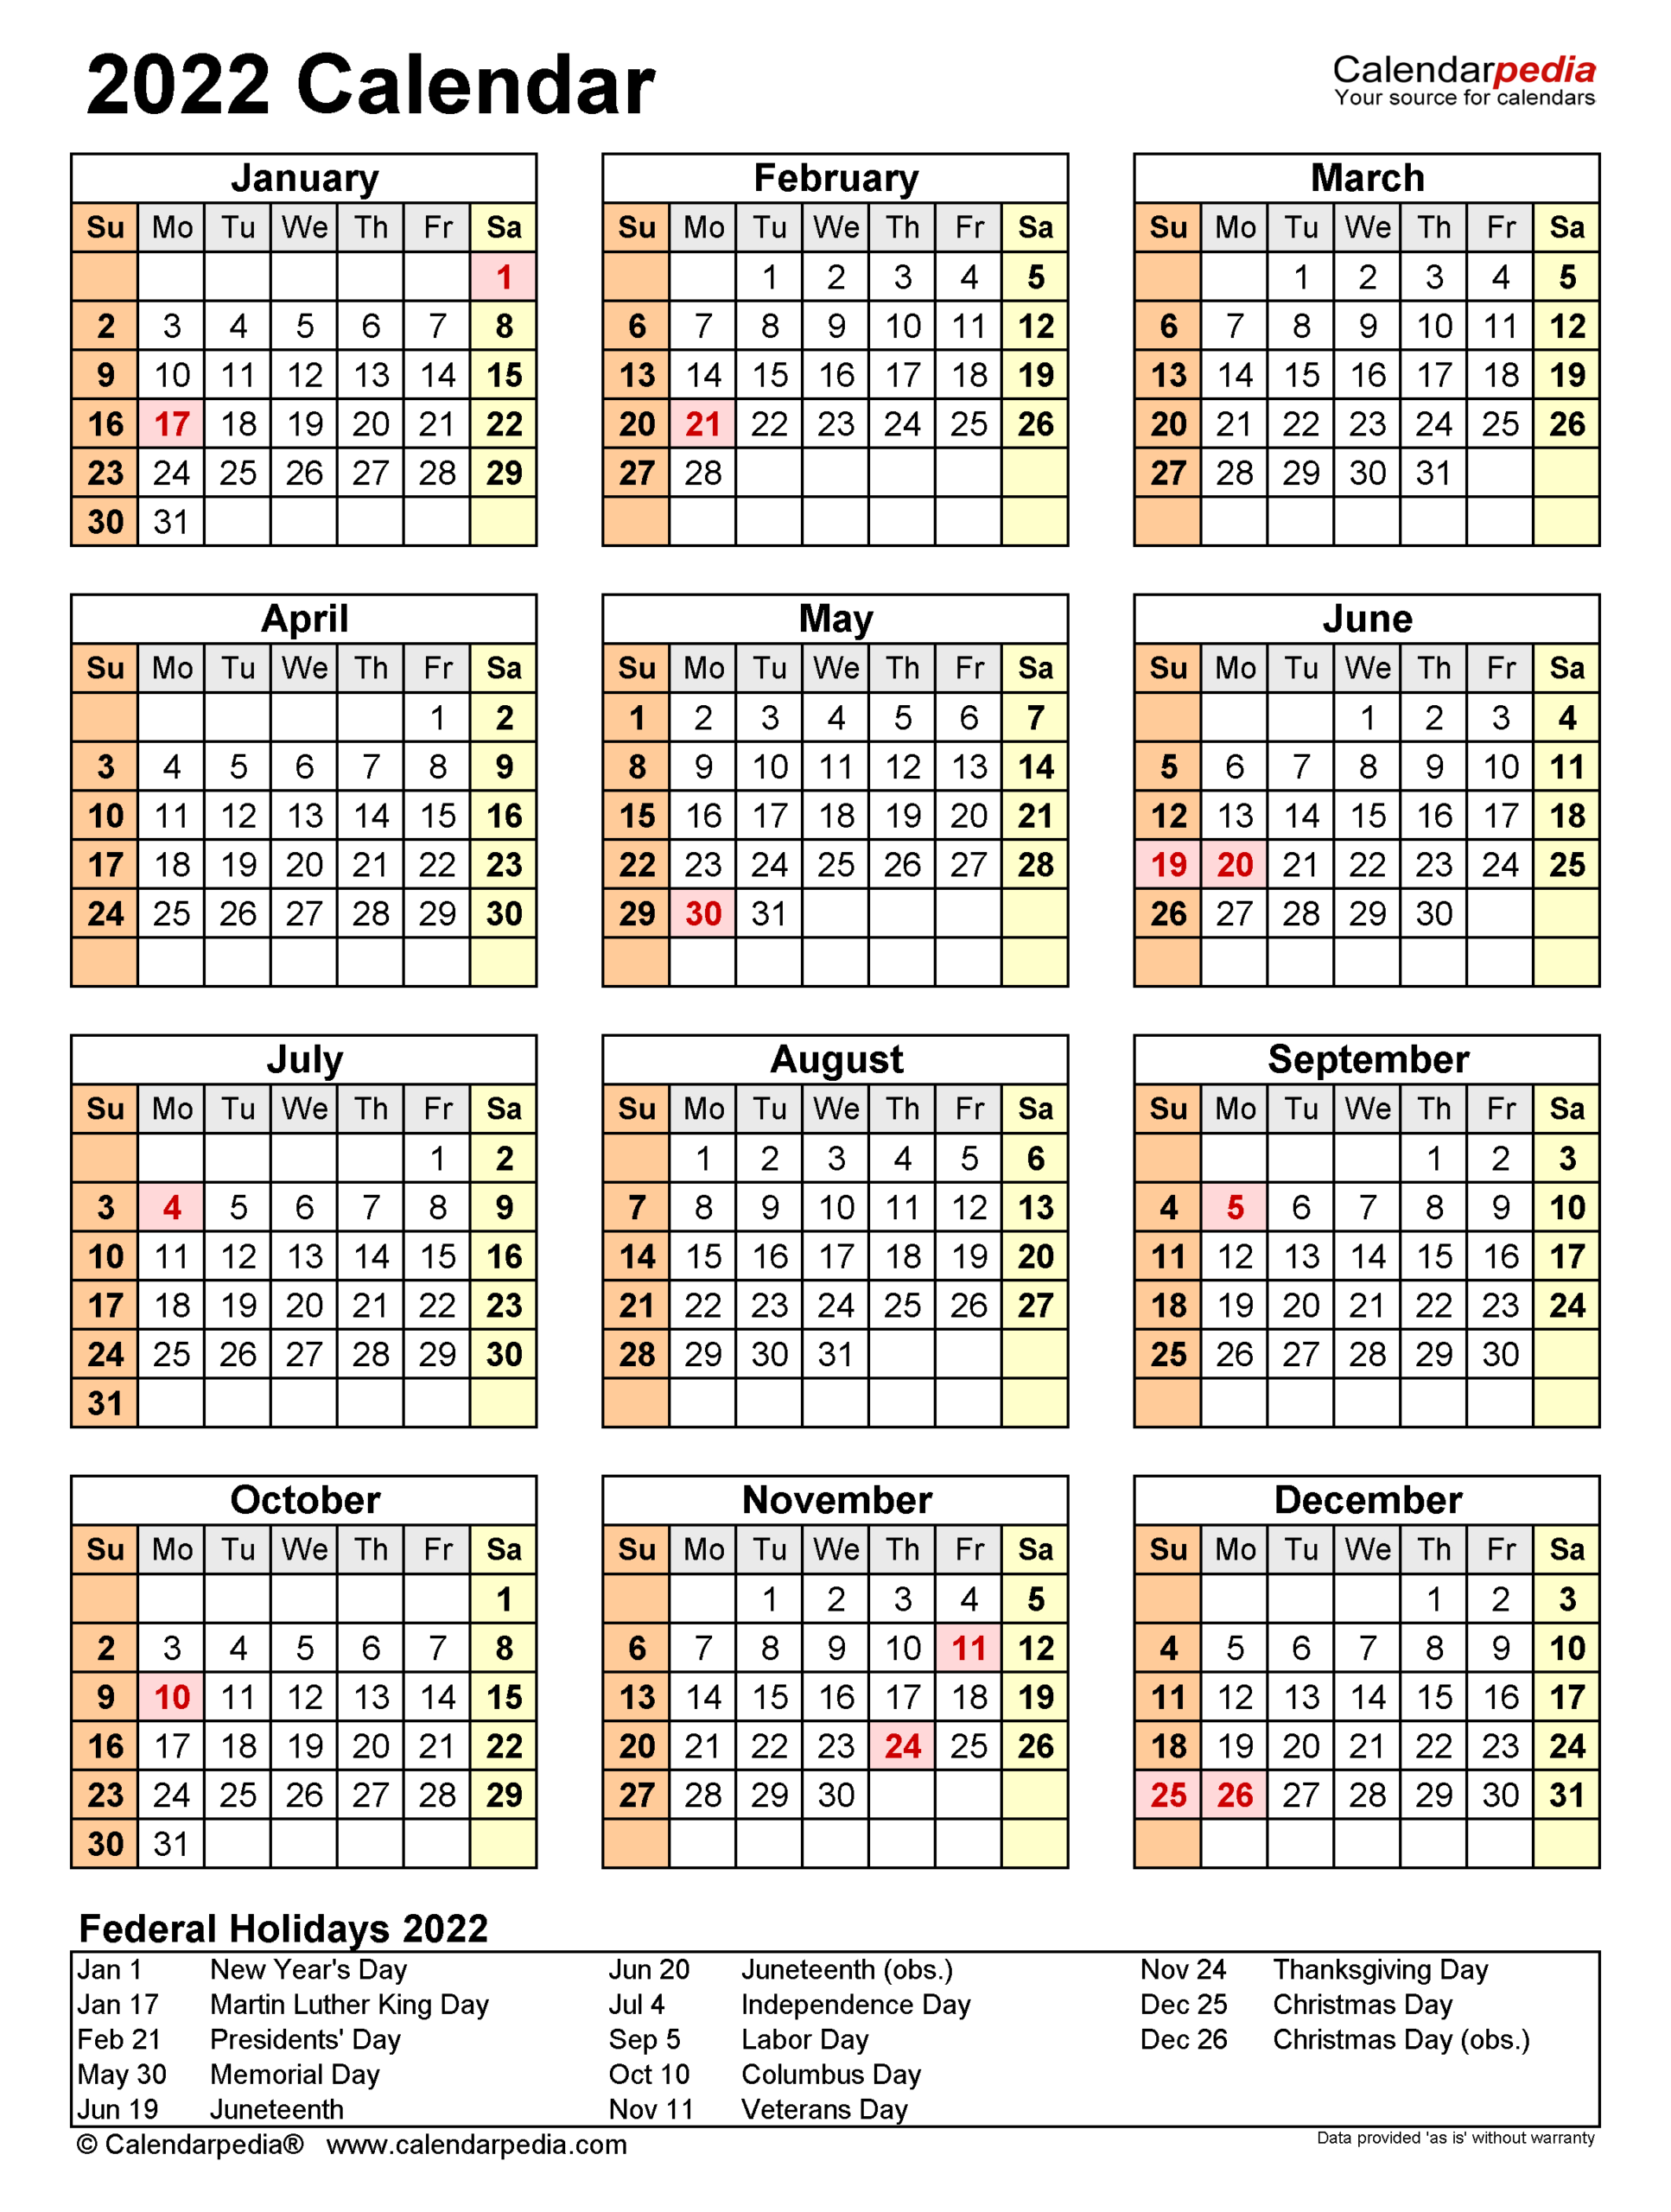 2022 Calendar Calendarpedia - Nexta-Calendar 2022 August Bank Holiday